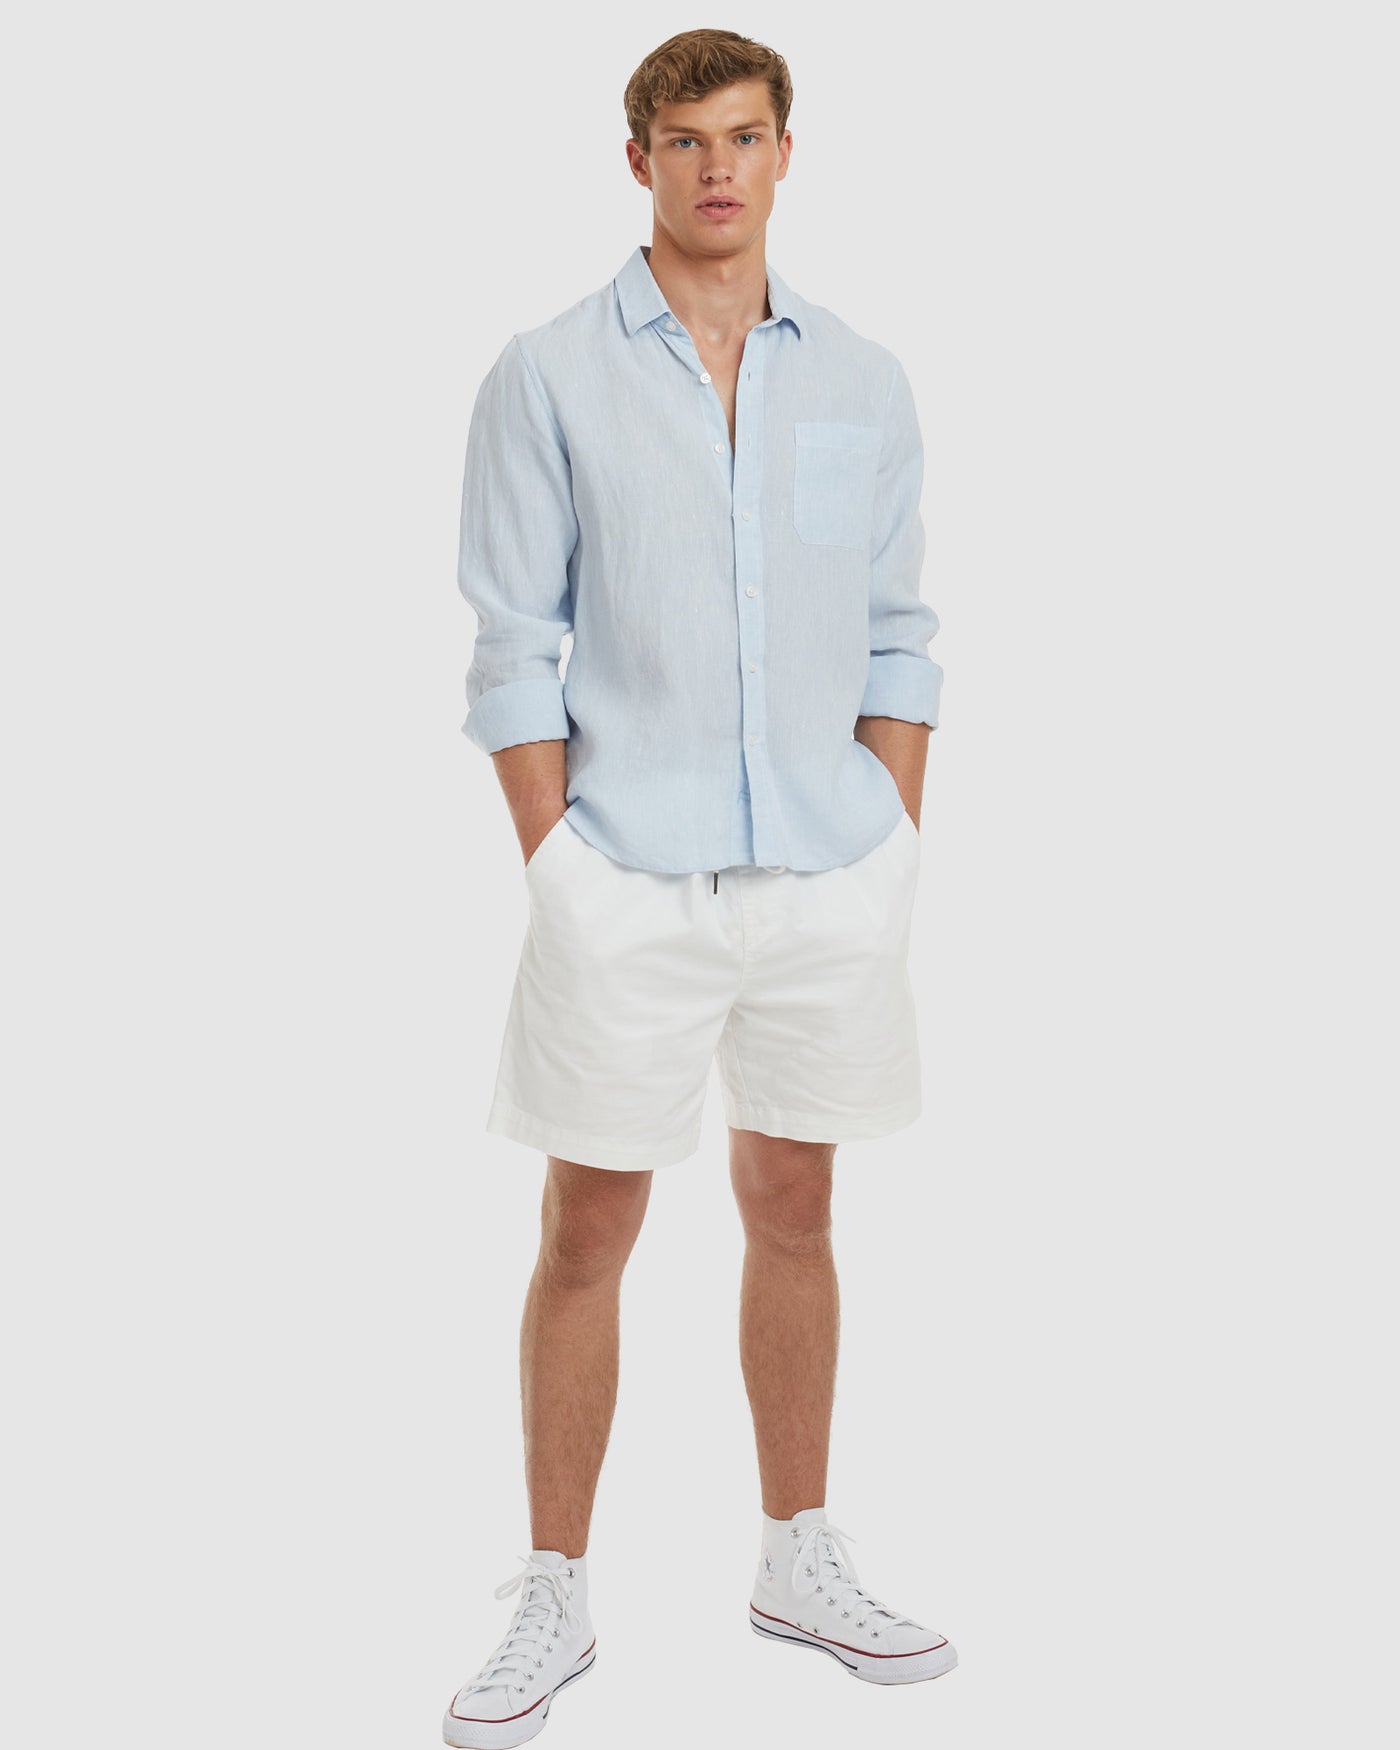 Ravello No Tuck Sky blue Linen Shirt - Slim Fit